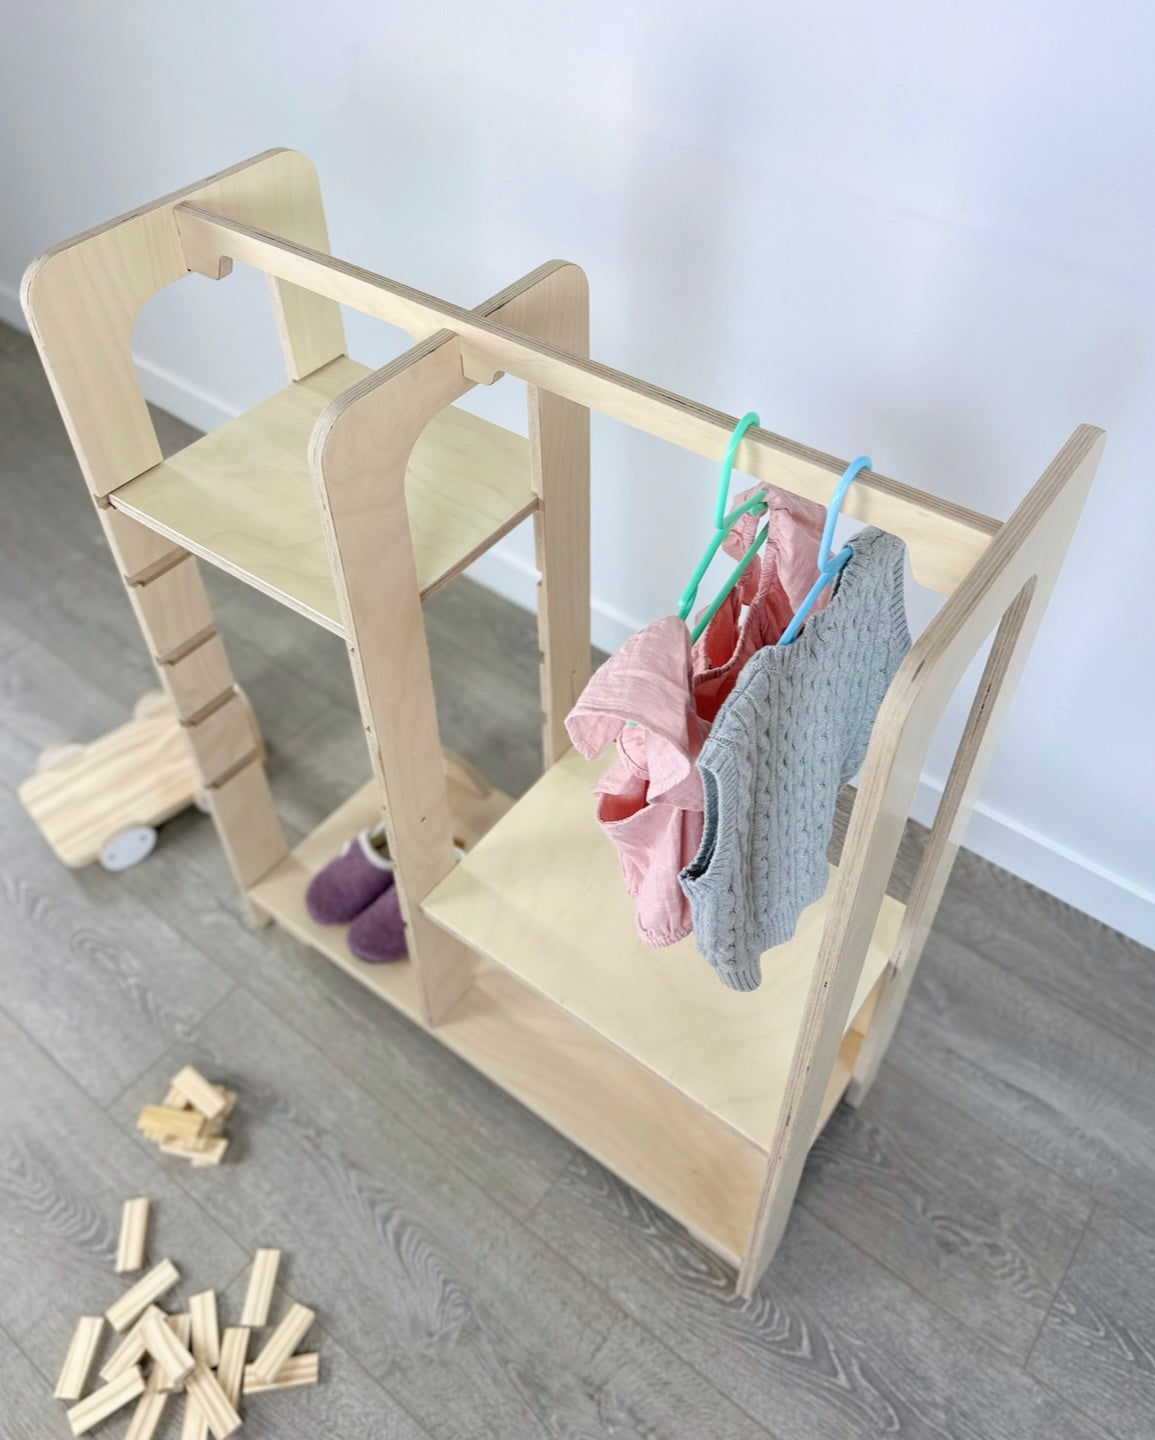 Eco-friendly design meets Montessori ethos: The ultimate kids' wardrobe.